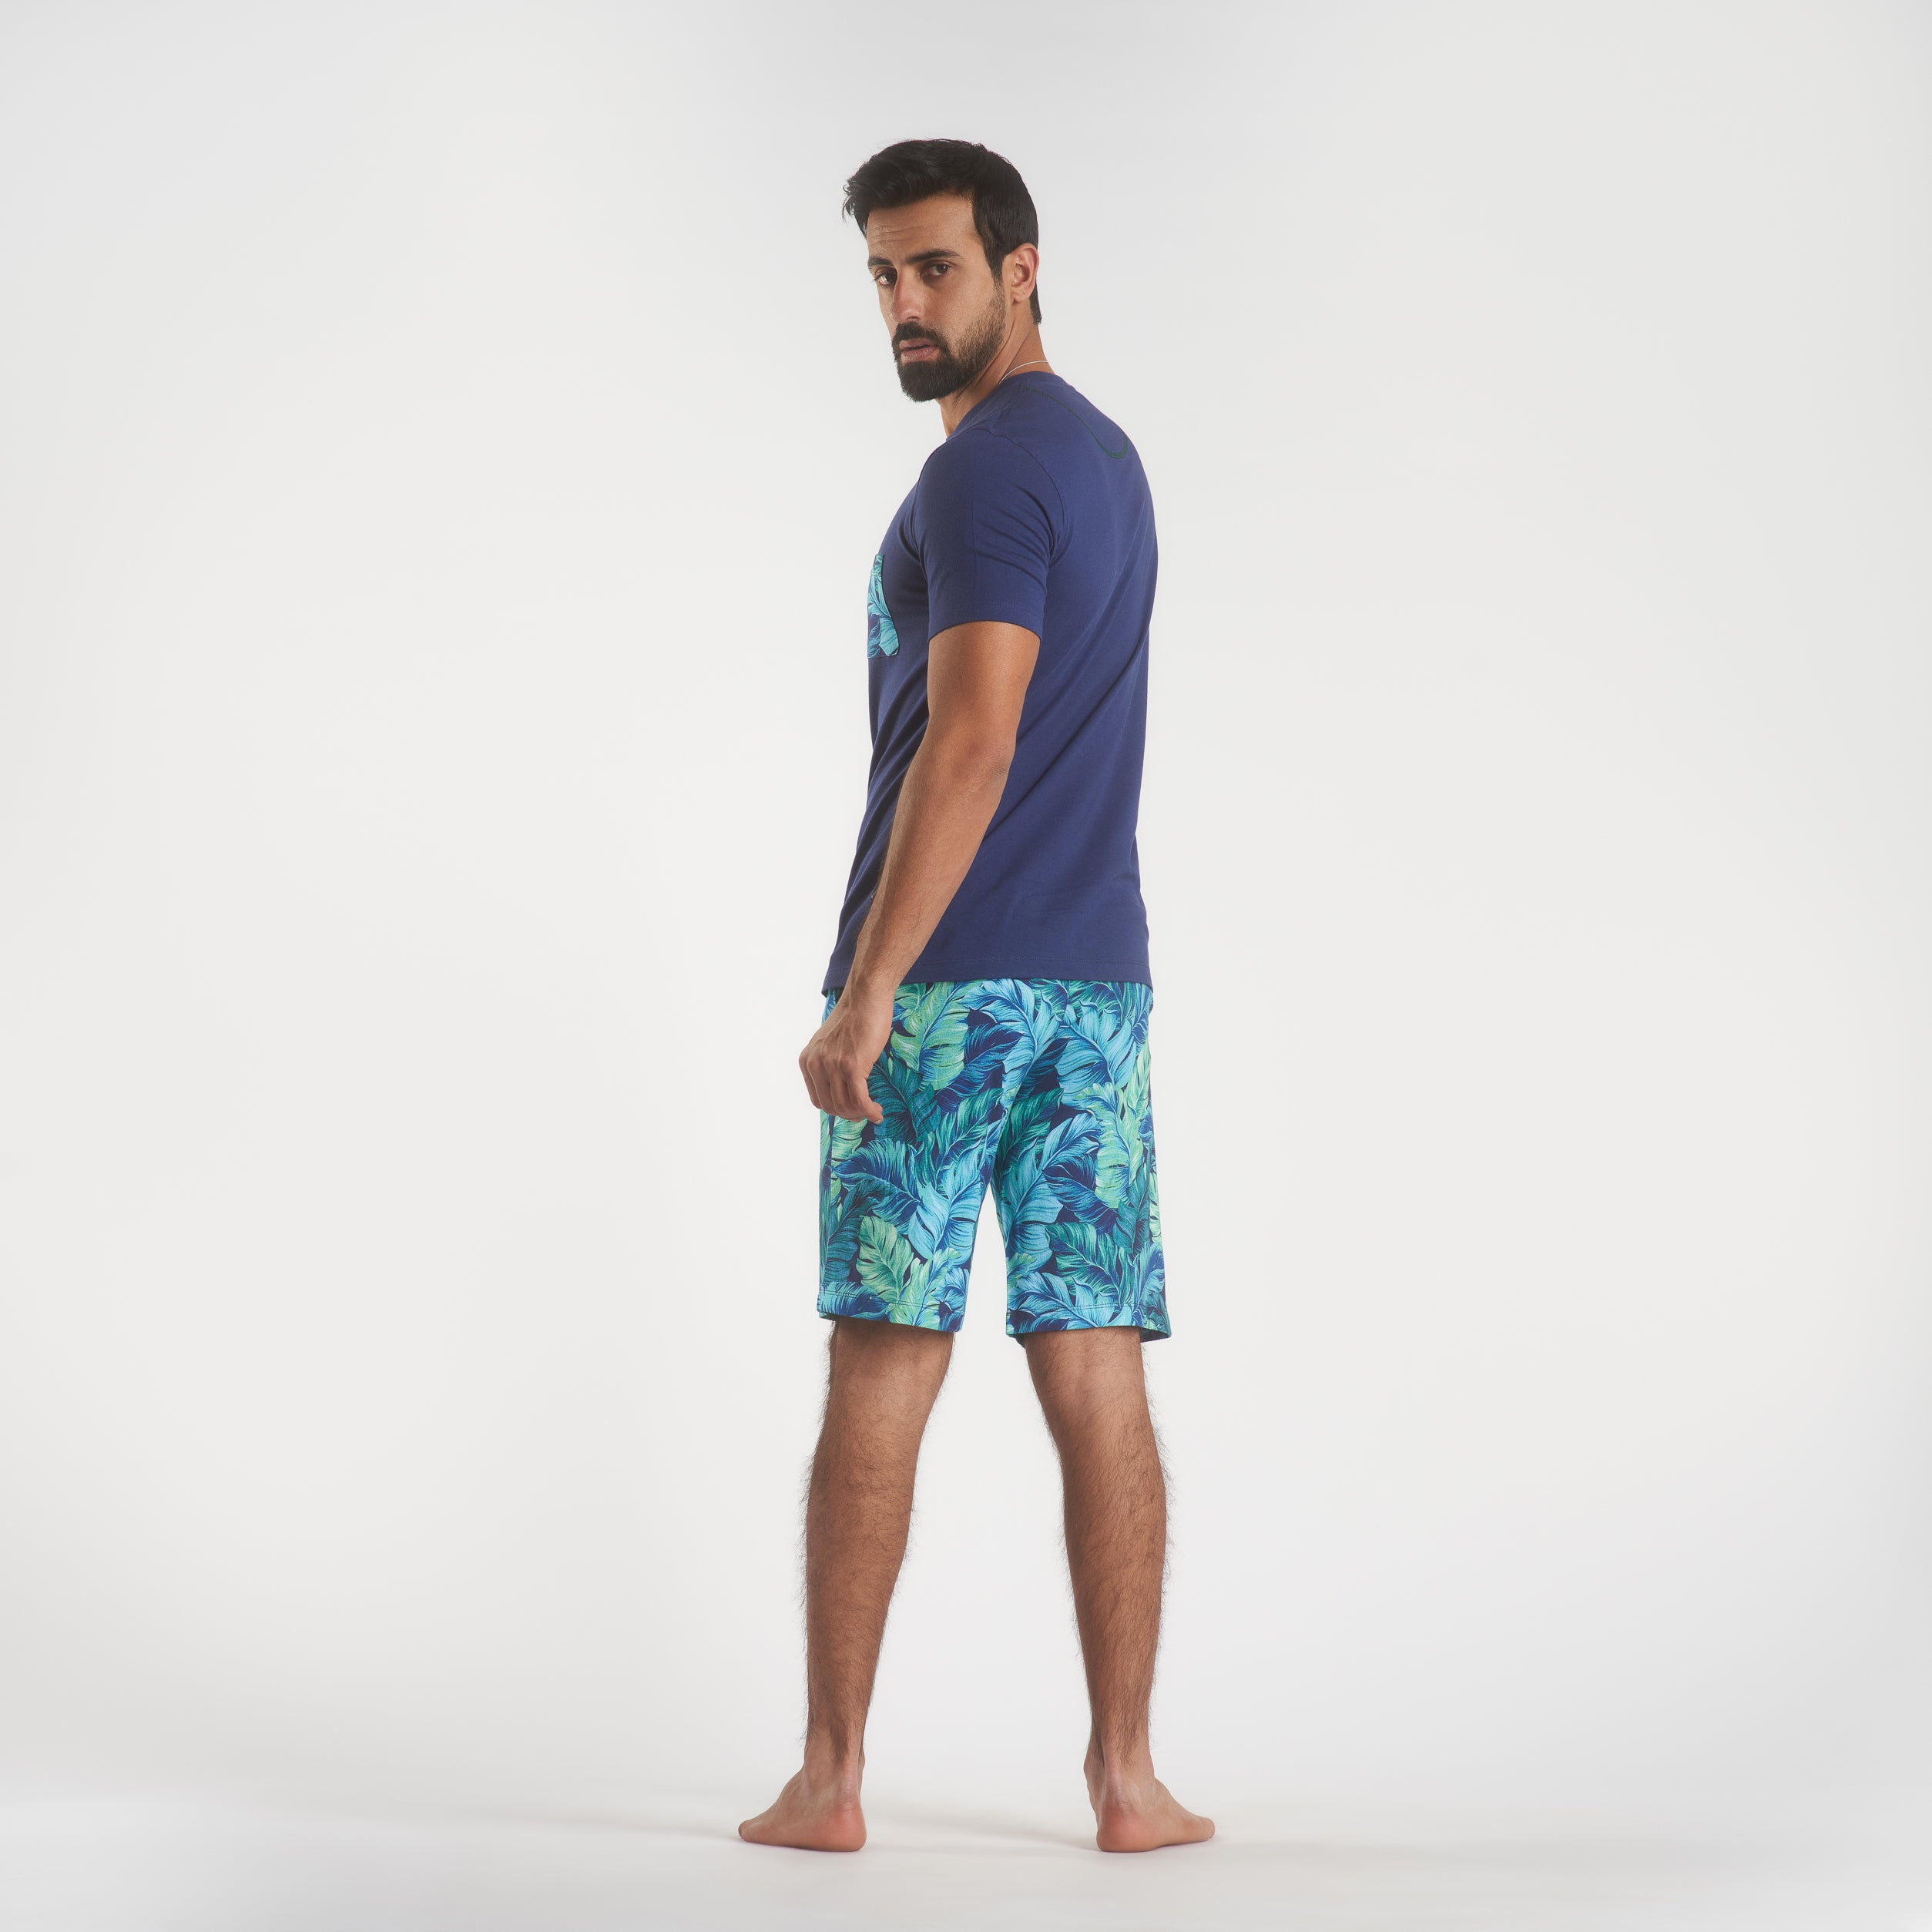 Pajamas - "Tropical" Printed Top & Short